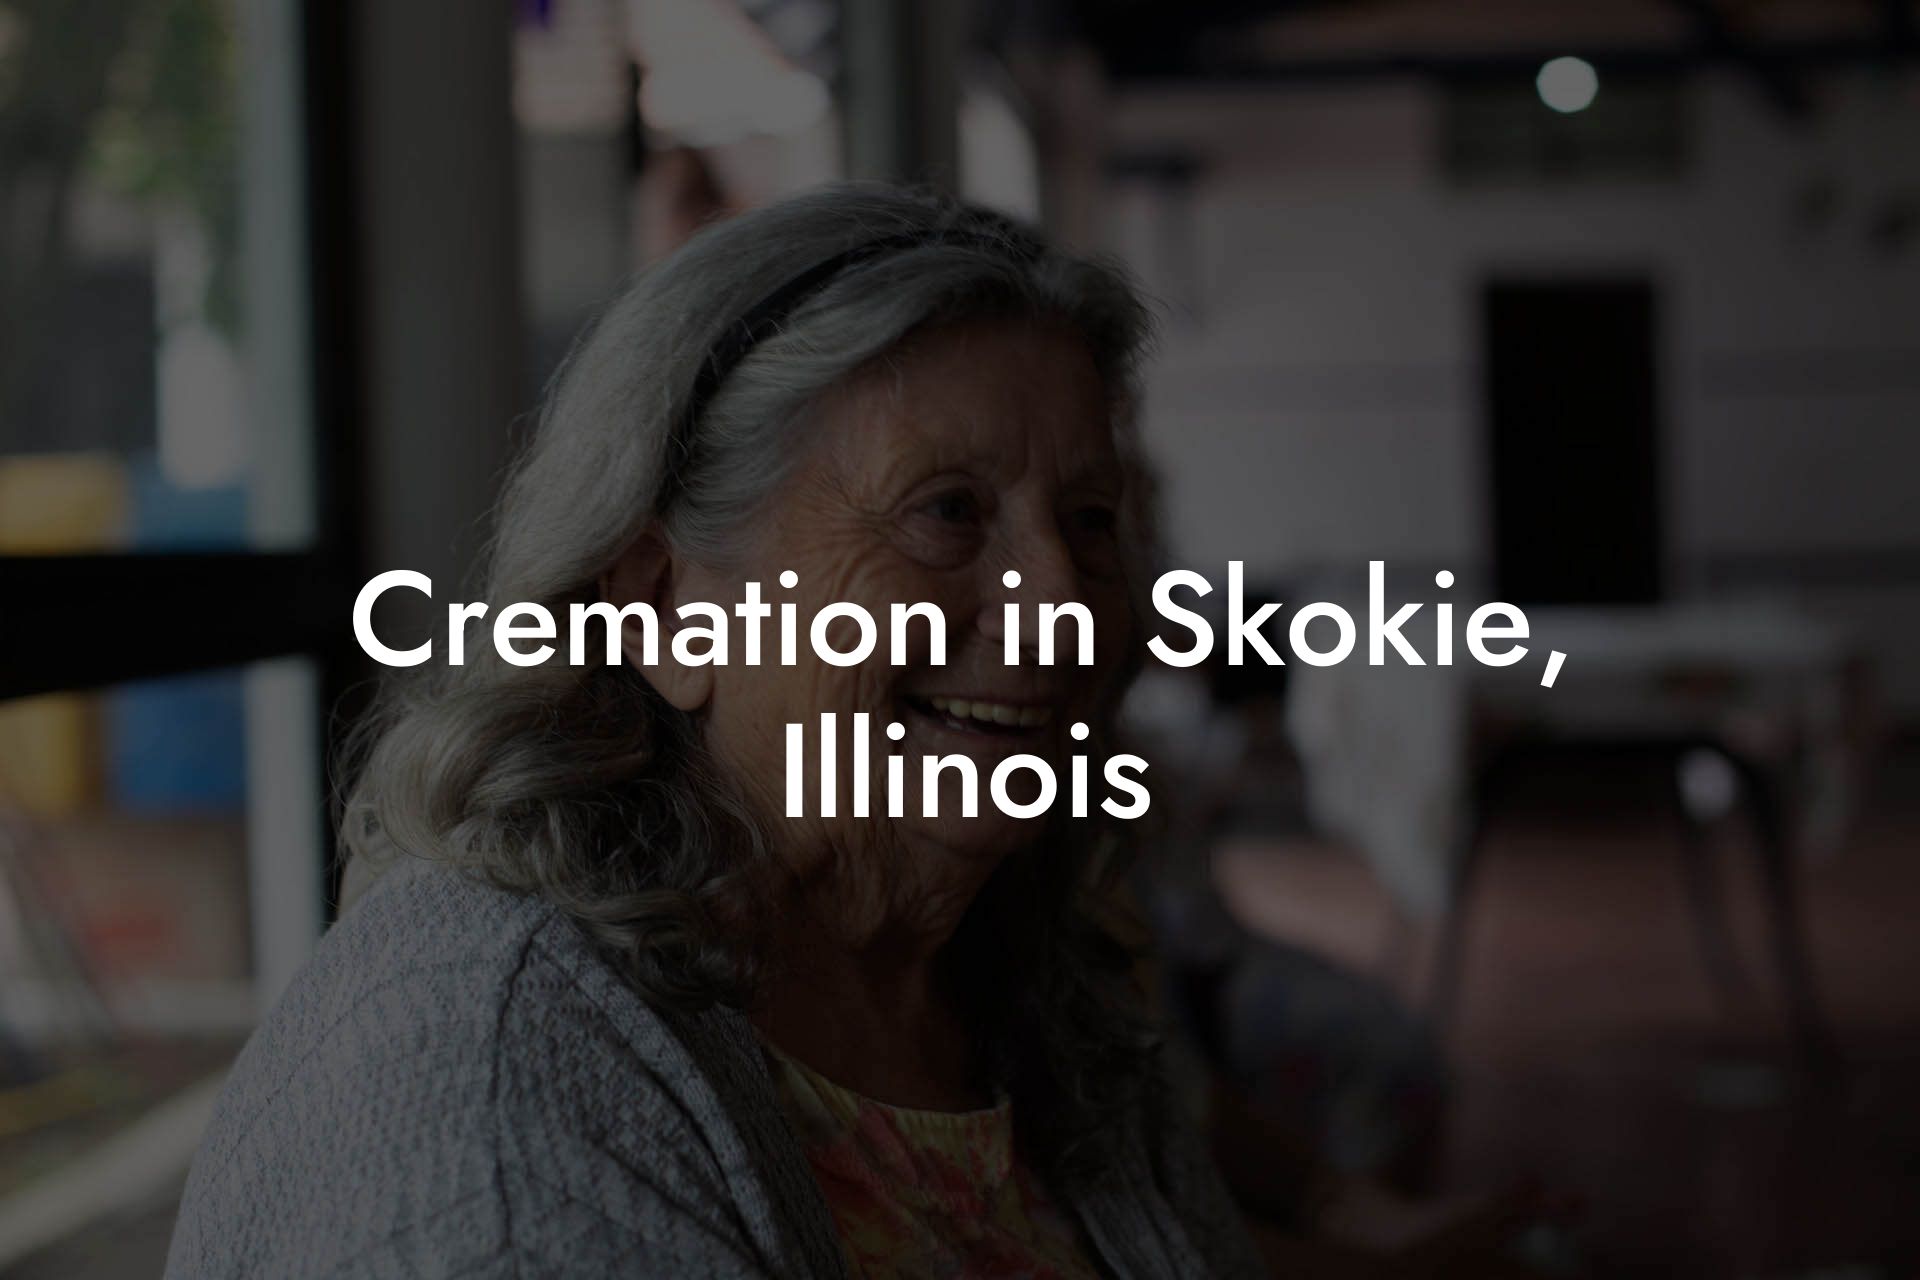 Cremation in Skokie, Illinois